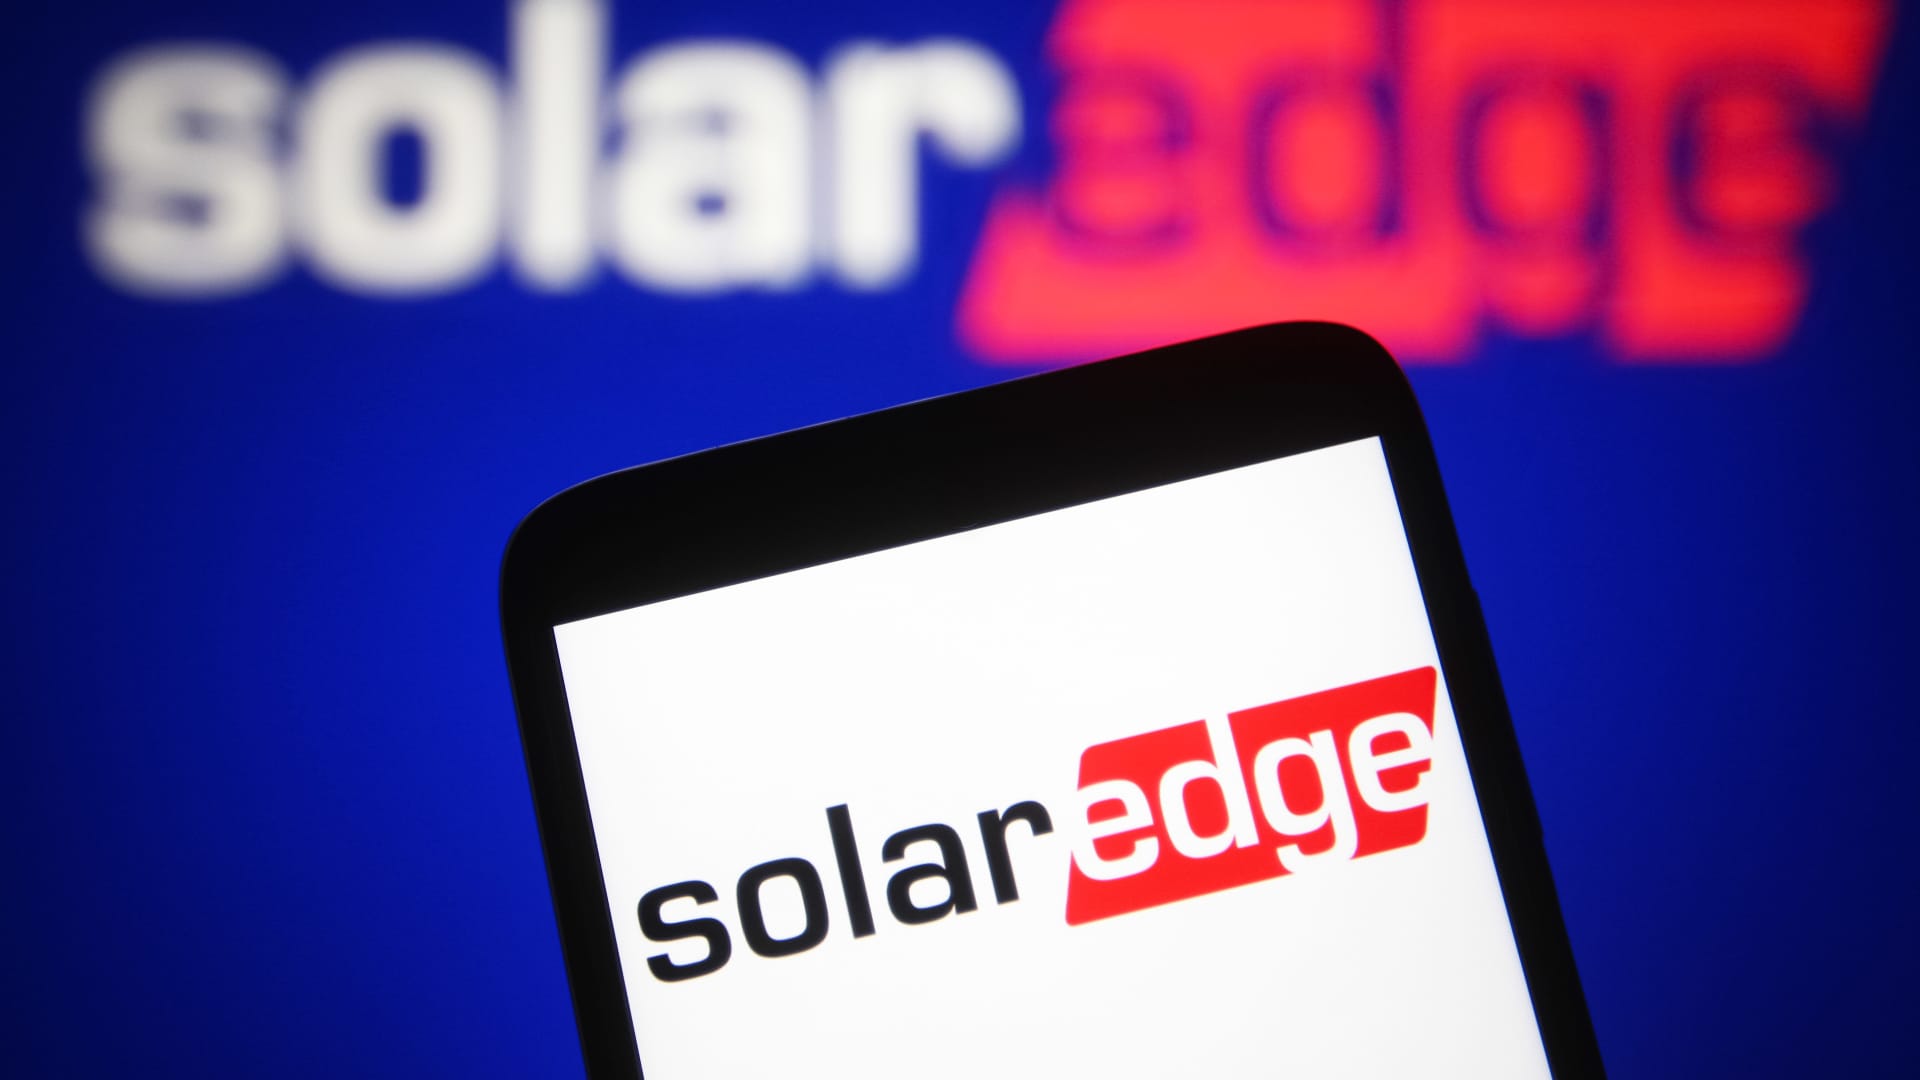 SolarEdge tumbles on weak first-quarter guidance